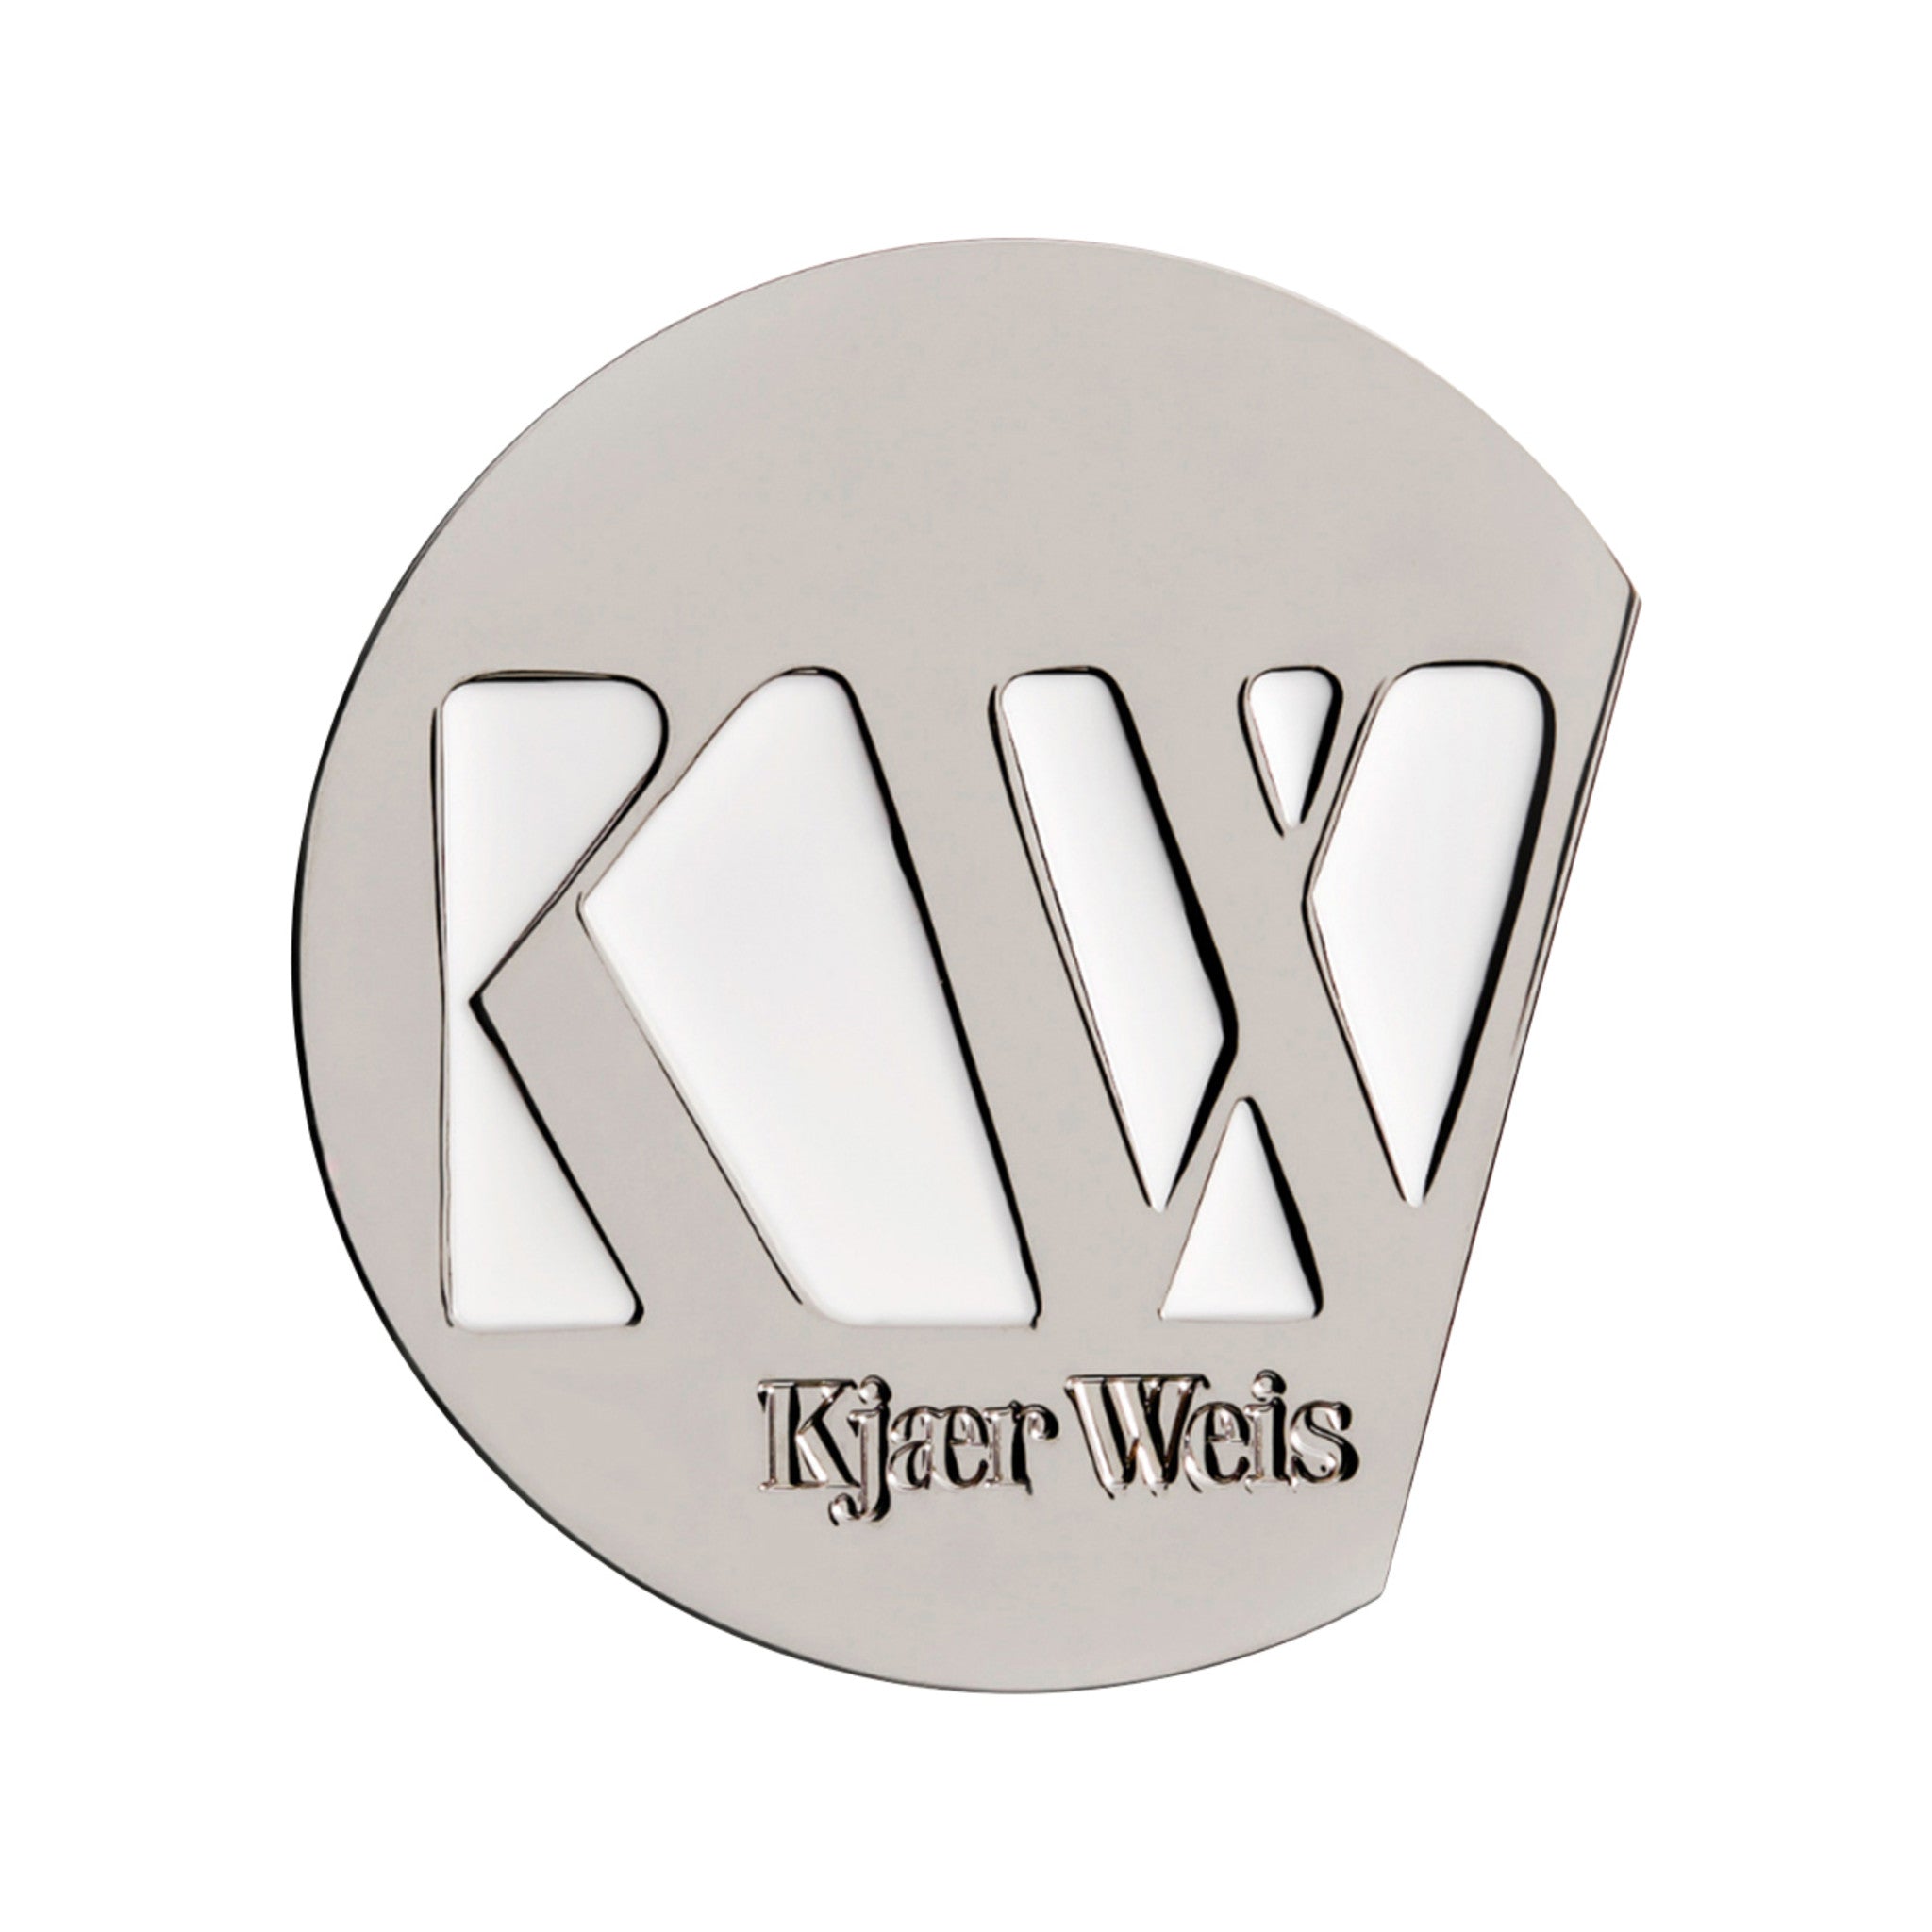 Kjaer Weis Iconic Edition Face Powder Case main image.